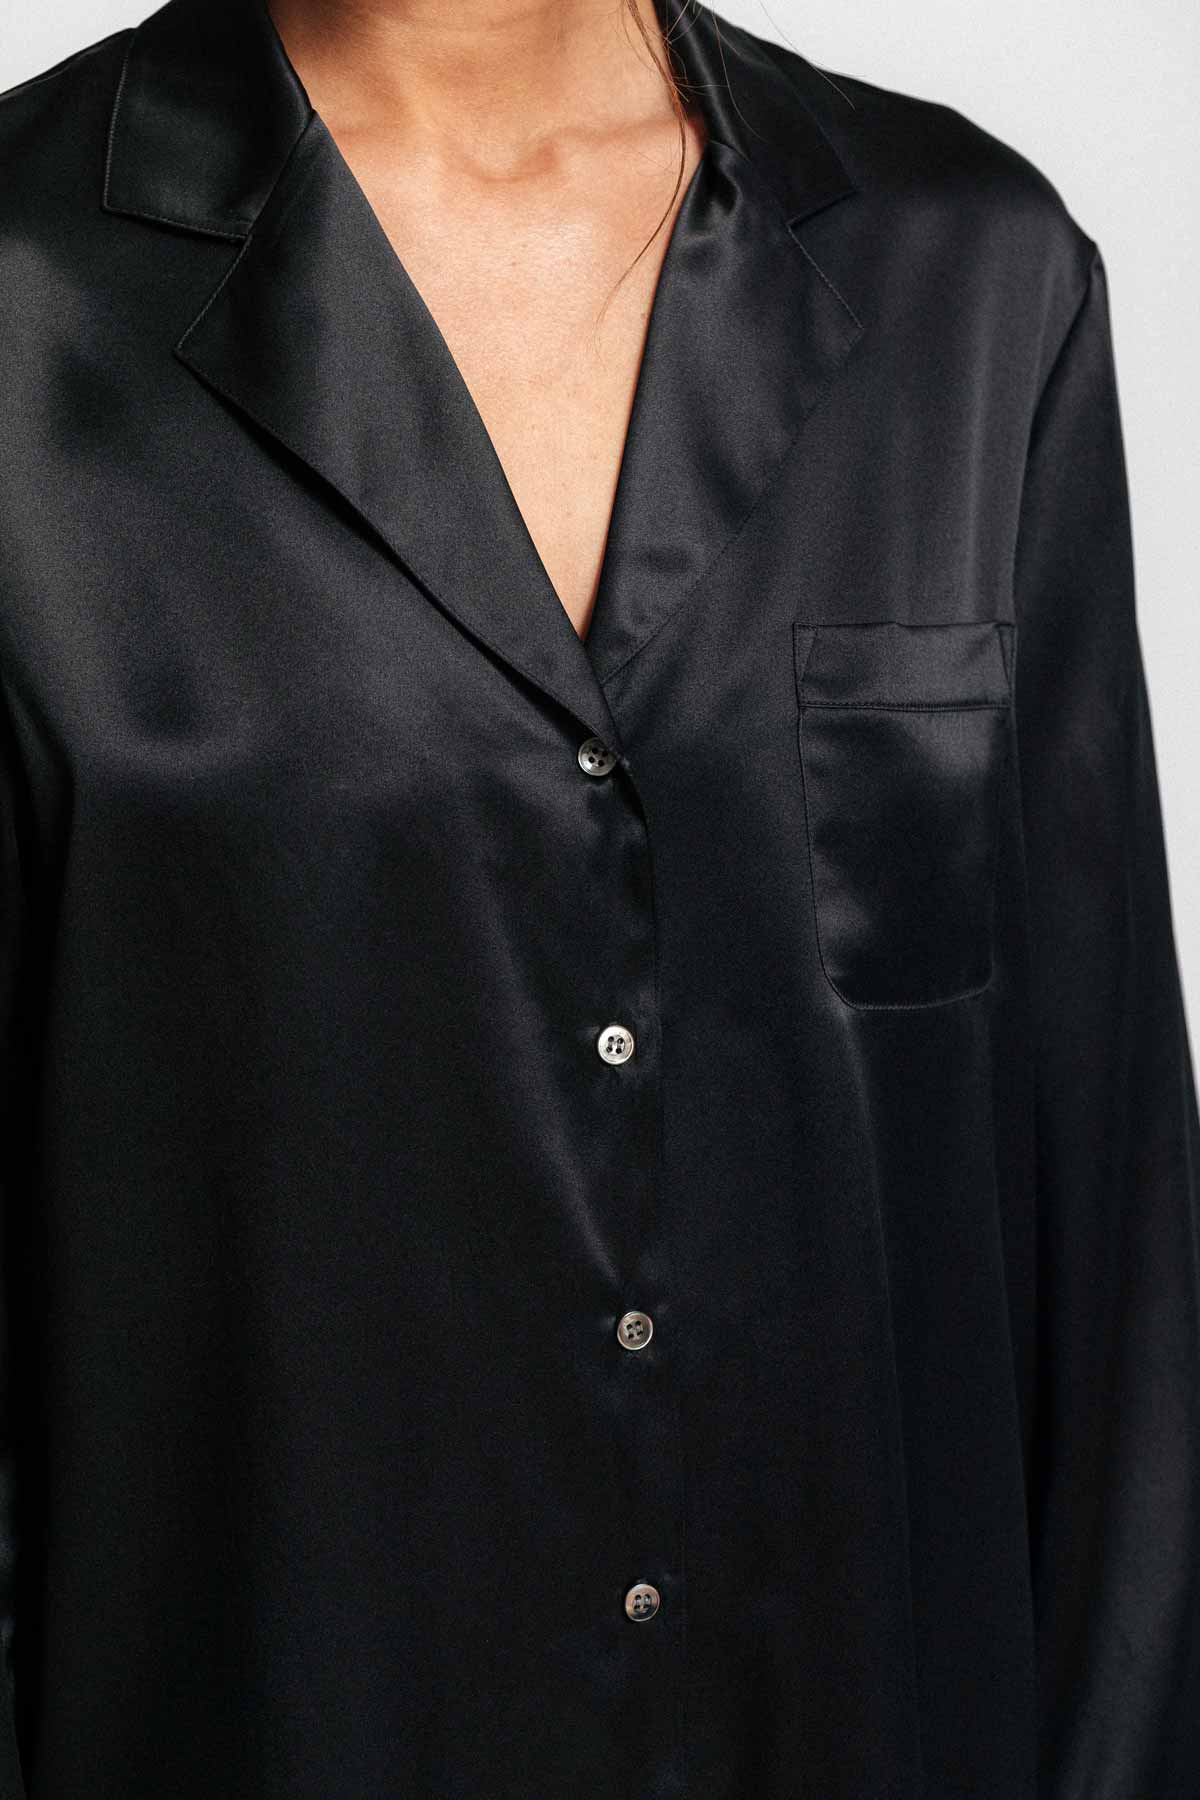 How to Style the Silk Pajama Shirt